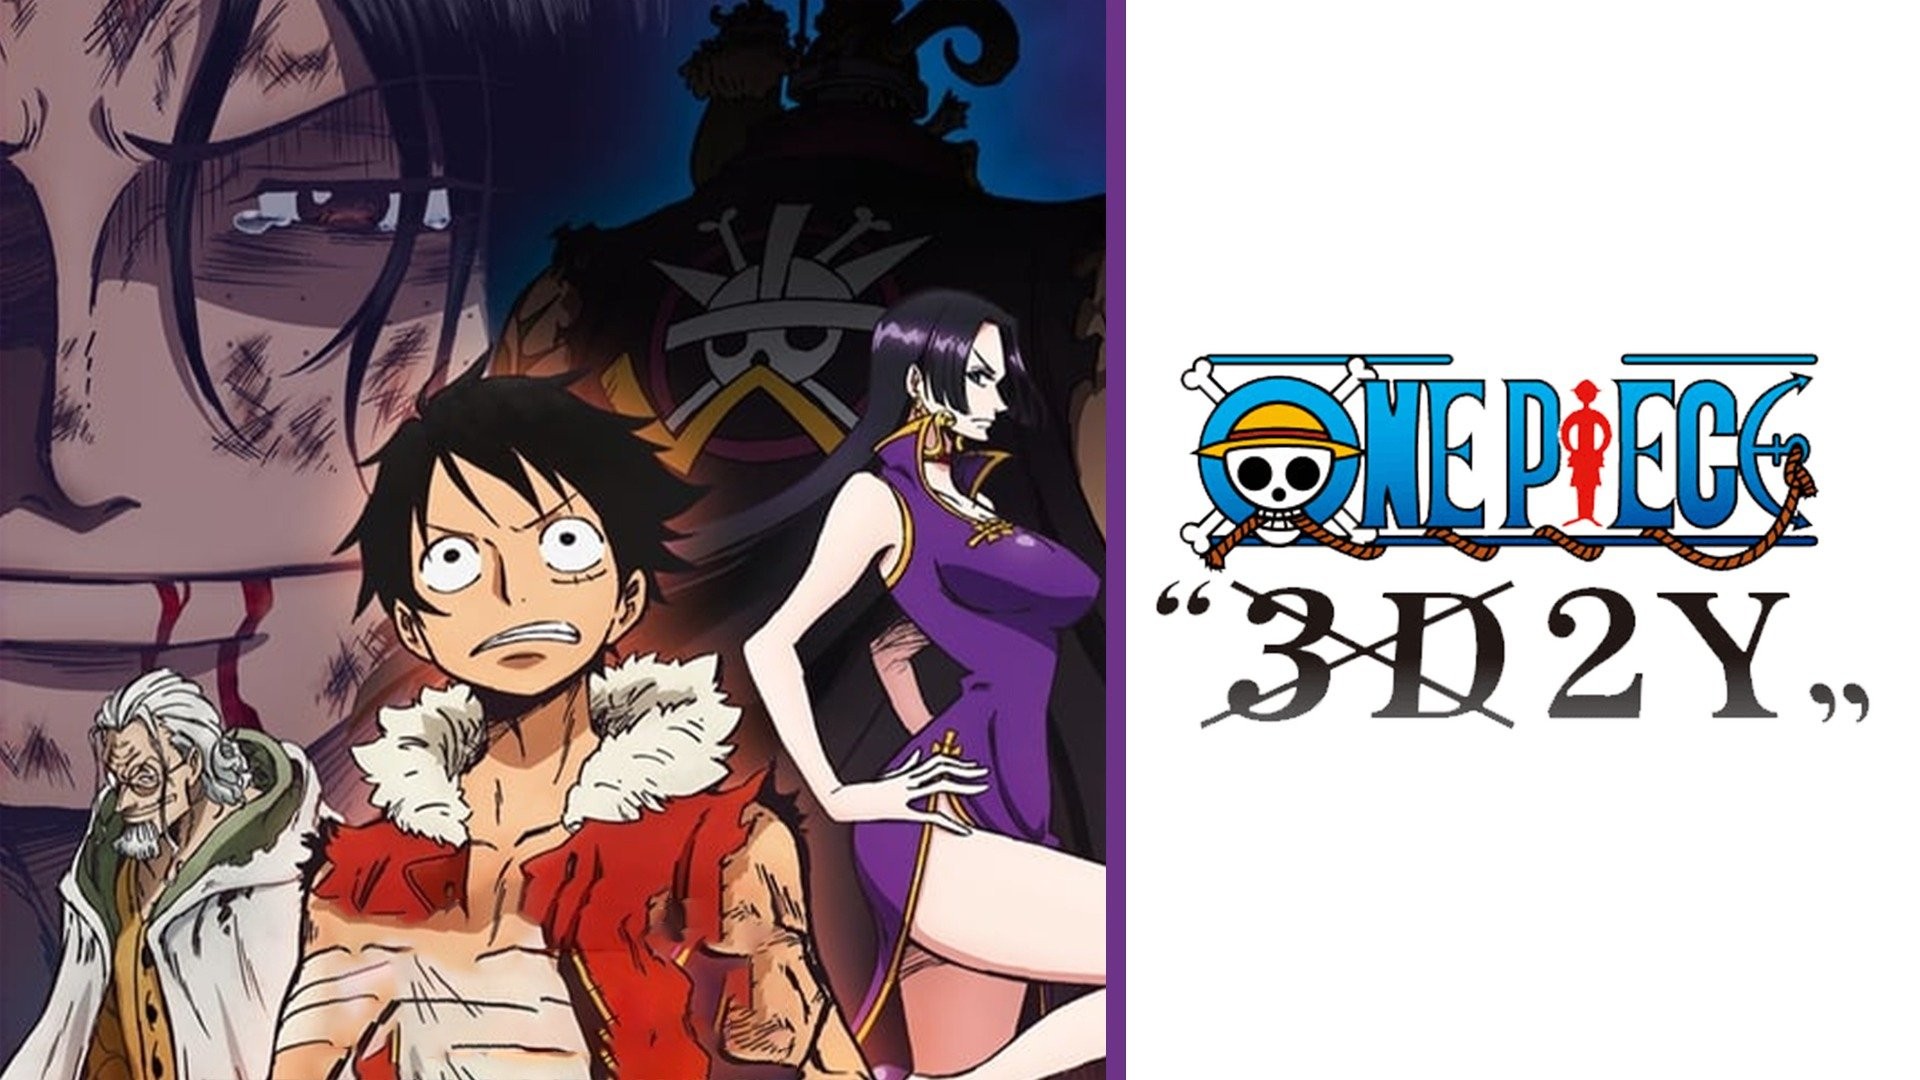 One Piece 3D2Y (Filme)